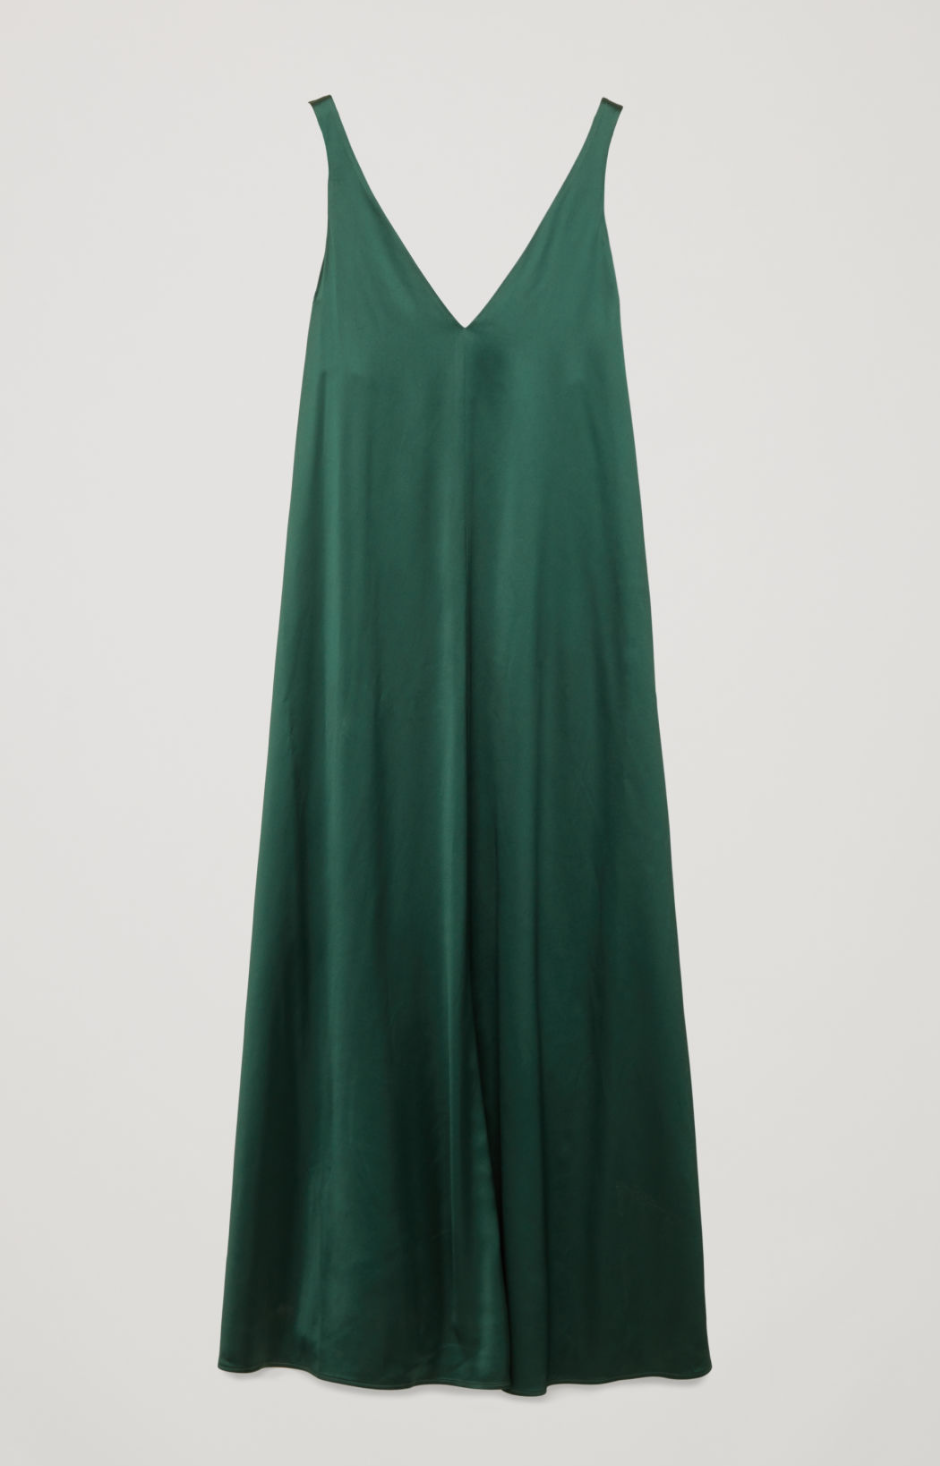 COS Green Satin Dress